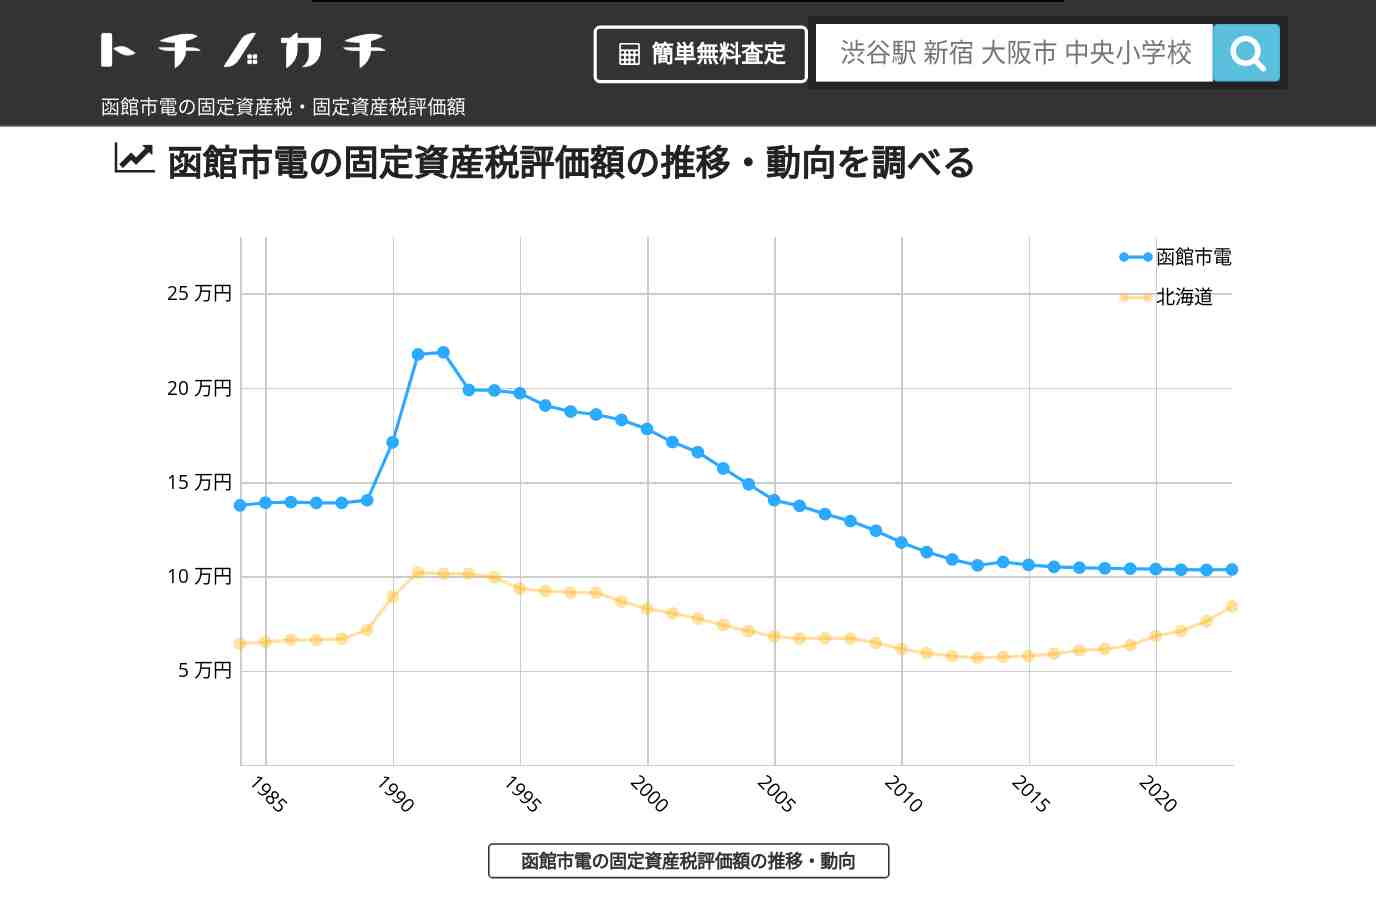 函館市電(北海道)の固定資産税・固定資産税評価額 | トチノカチ